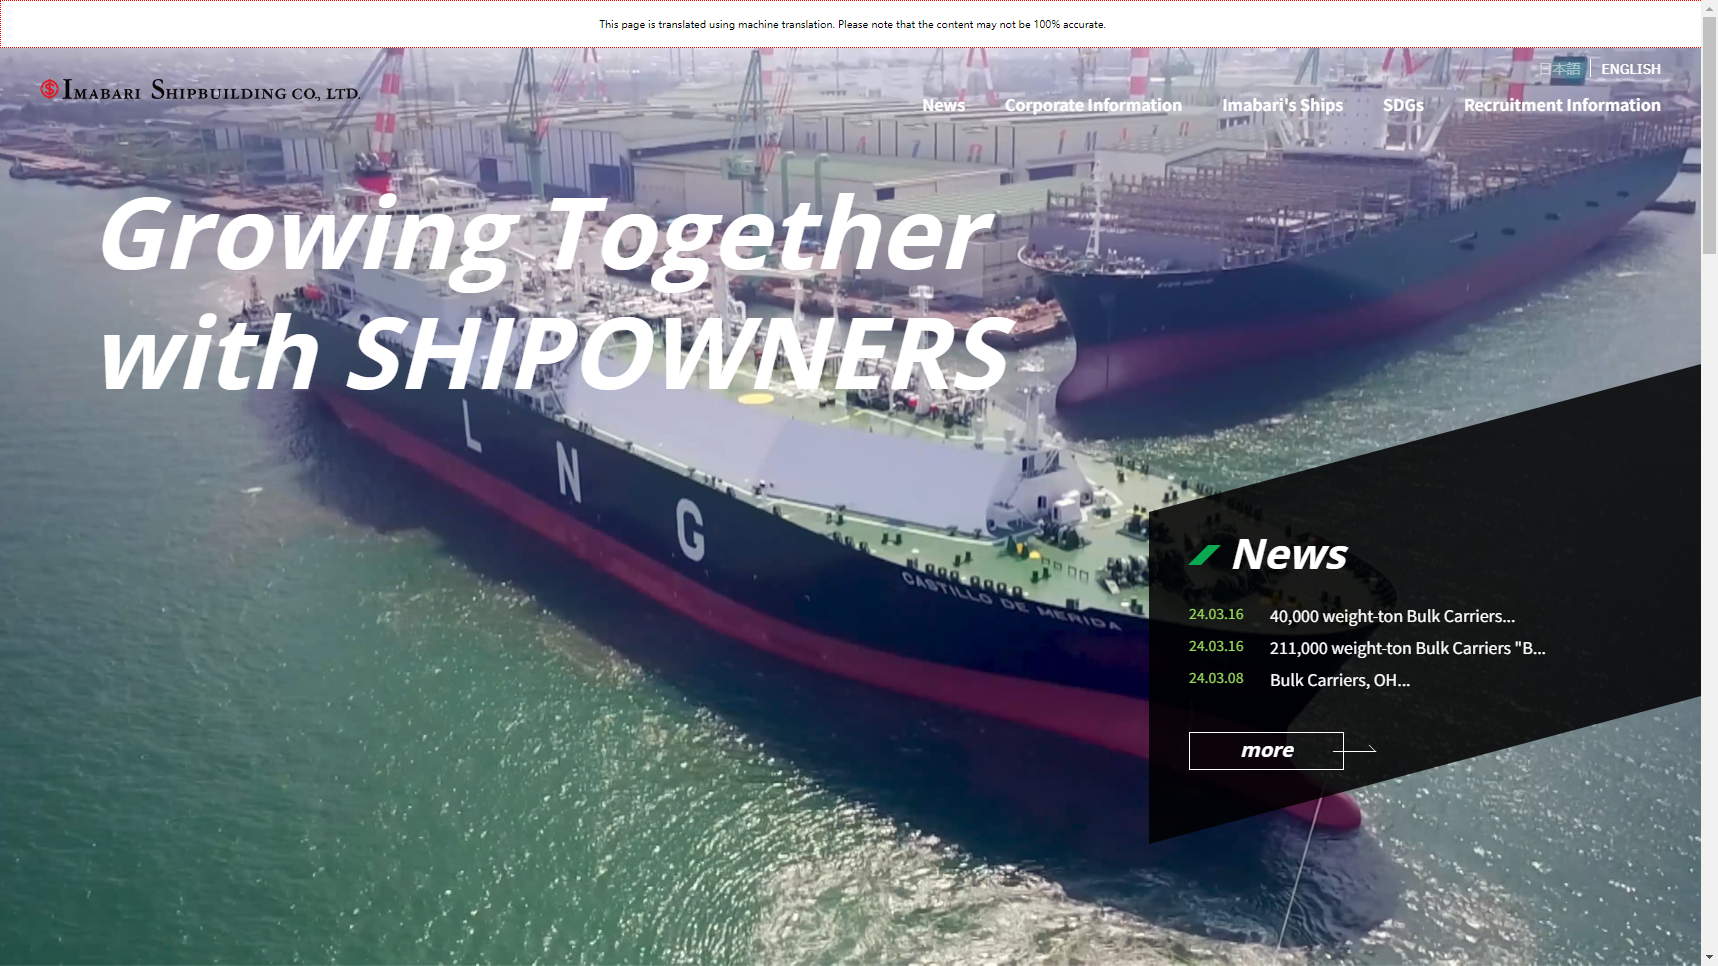 Imabari Shipbuilding Co., Ltd. - Vessel Manufacturer